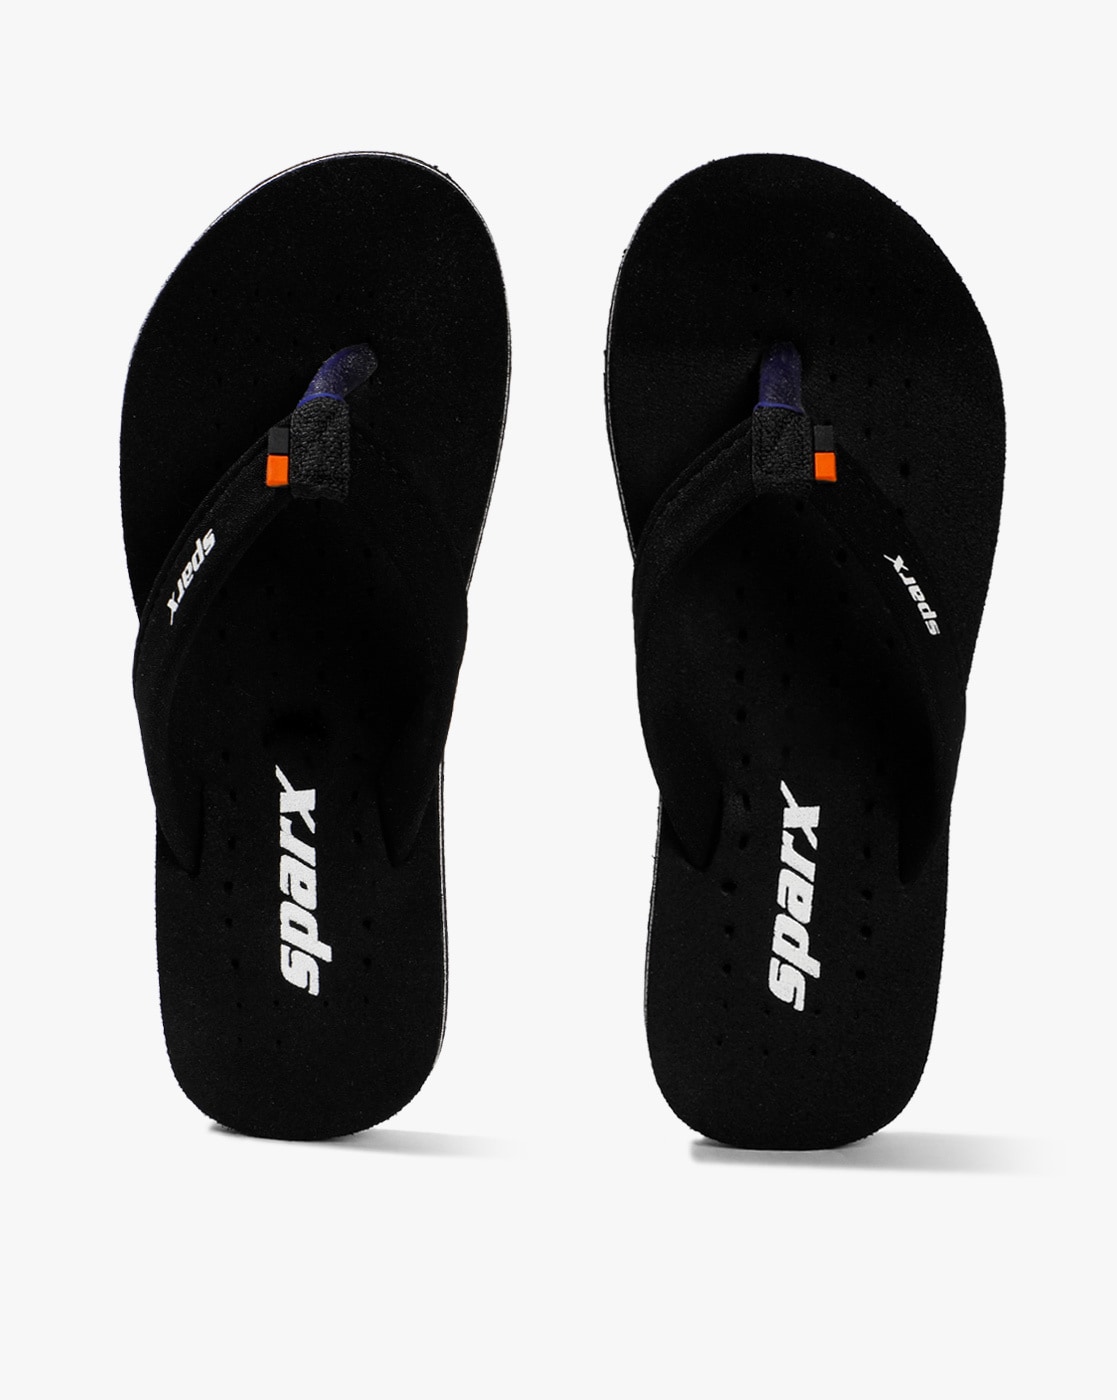 Buy Sparx Men SFG-143 Black White Slides (SF0143GBKWH0006) at Amazon.in